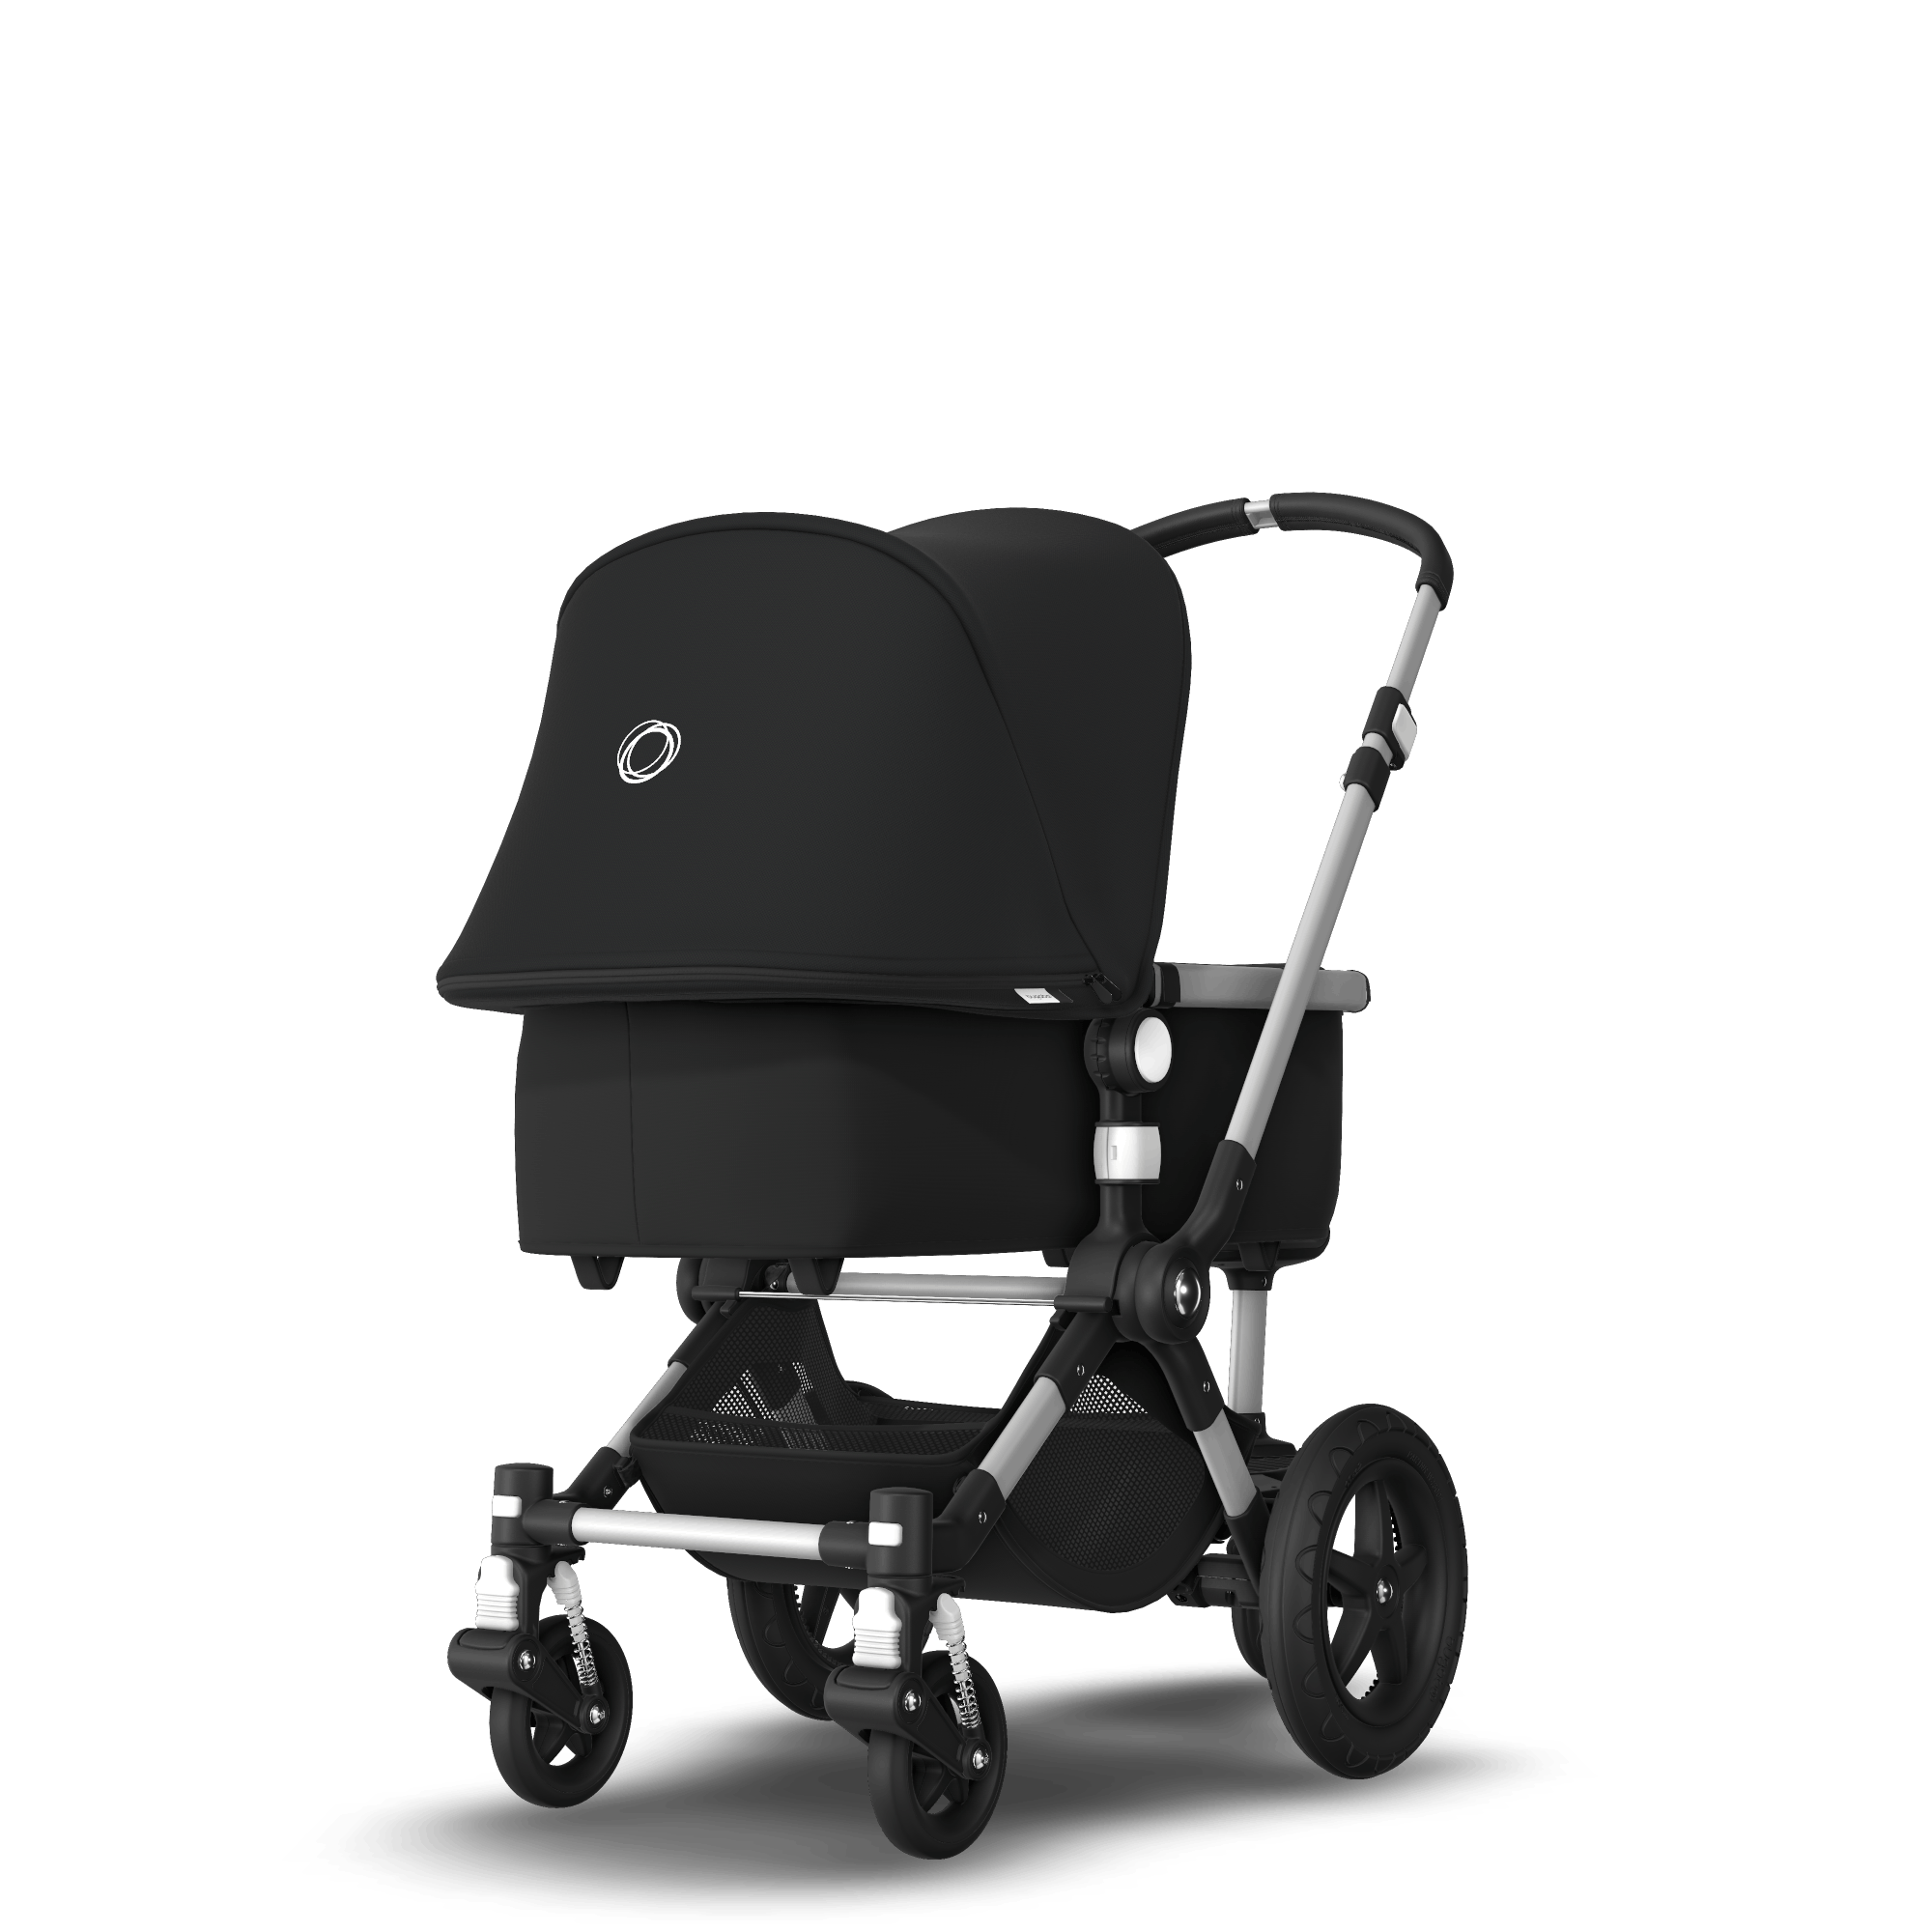 bugaboo cameleon stroller car seat compatibility